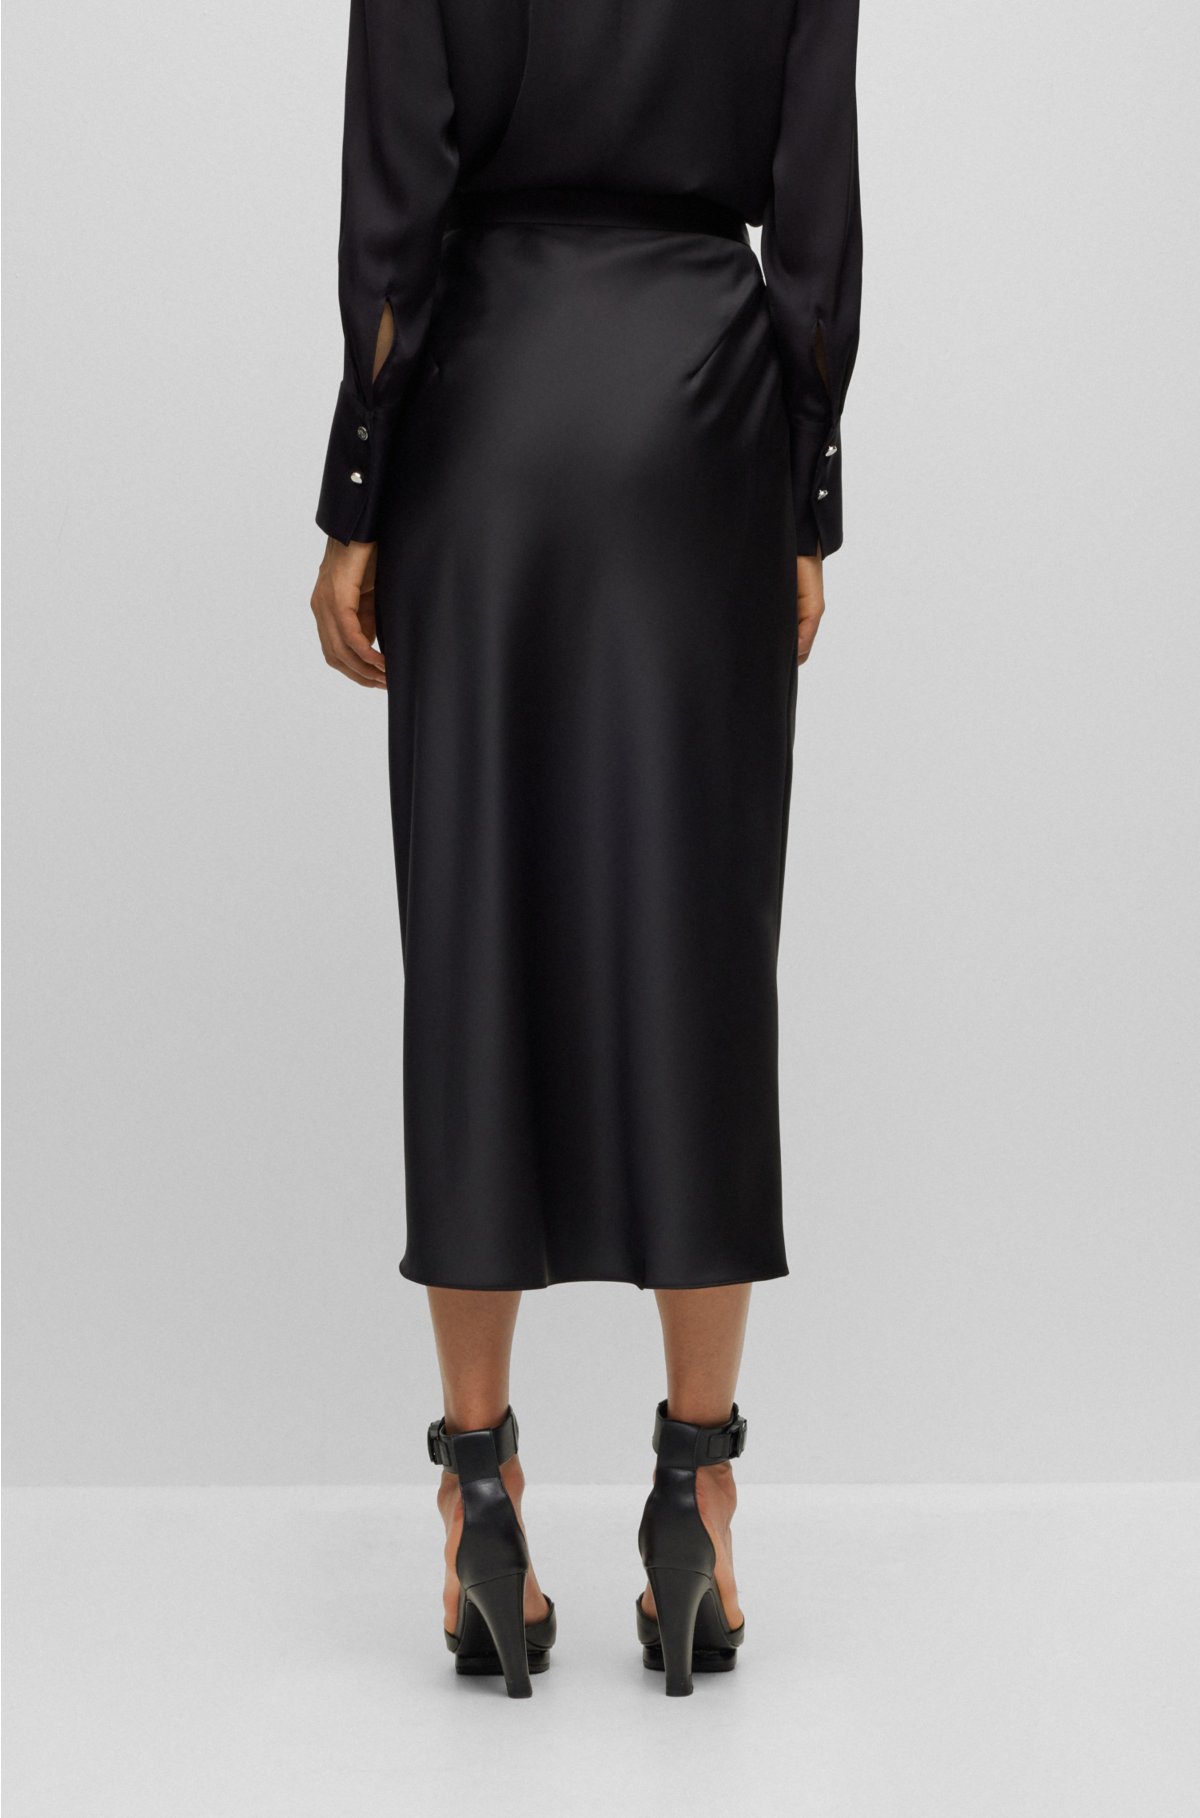 Black Satin High Waisted Pencil Skirt, Custom Fit, Handmade, Fully Lined,  Satin Fabric